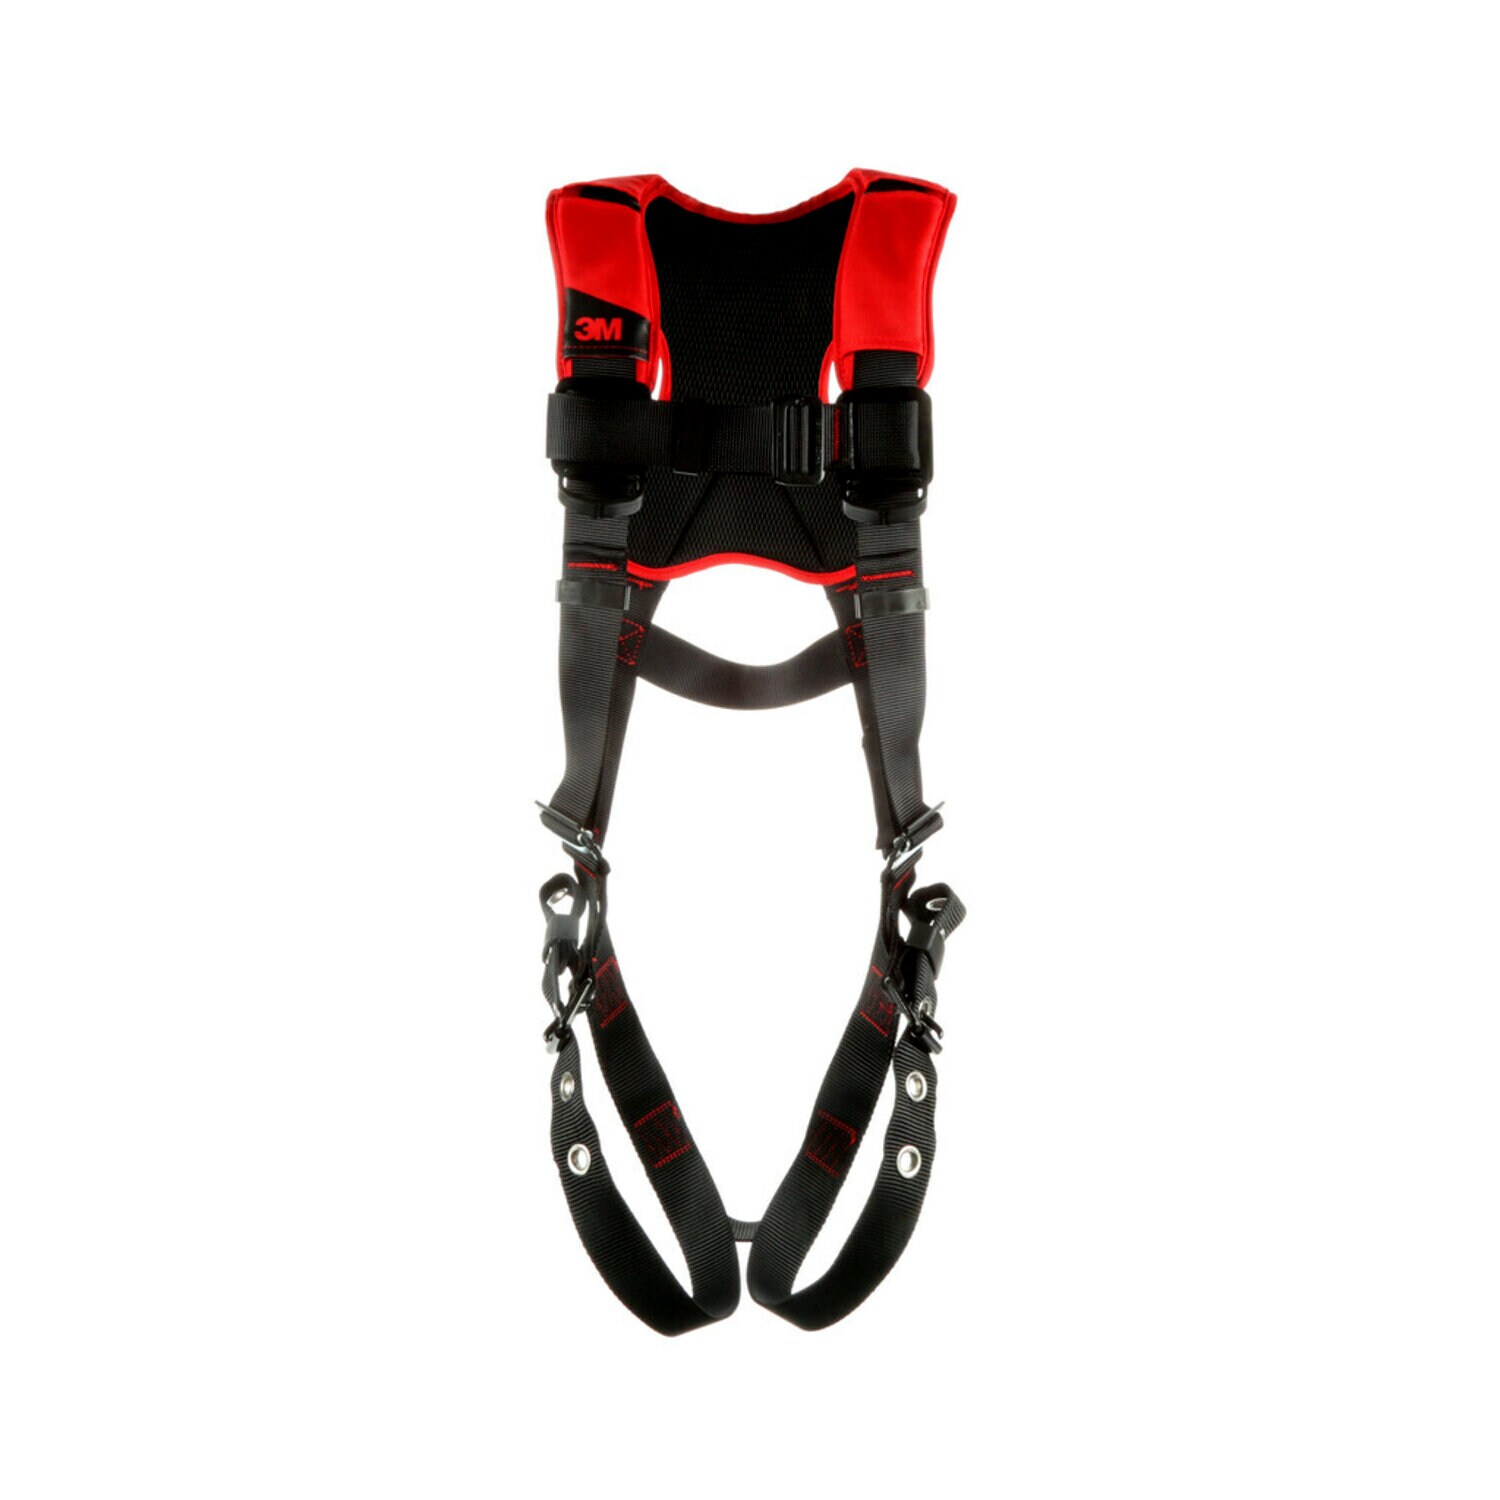 7012816690 - 3M Protecta P200 Comfort Vest Safety Harness 1161418, Medium/Large